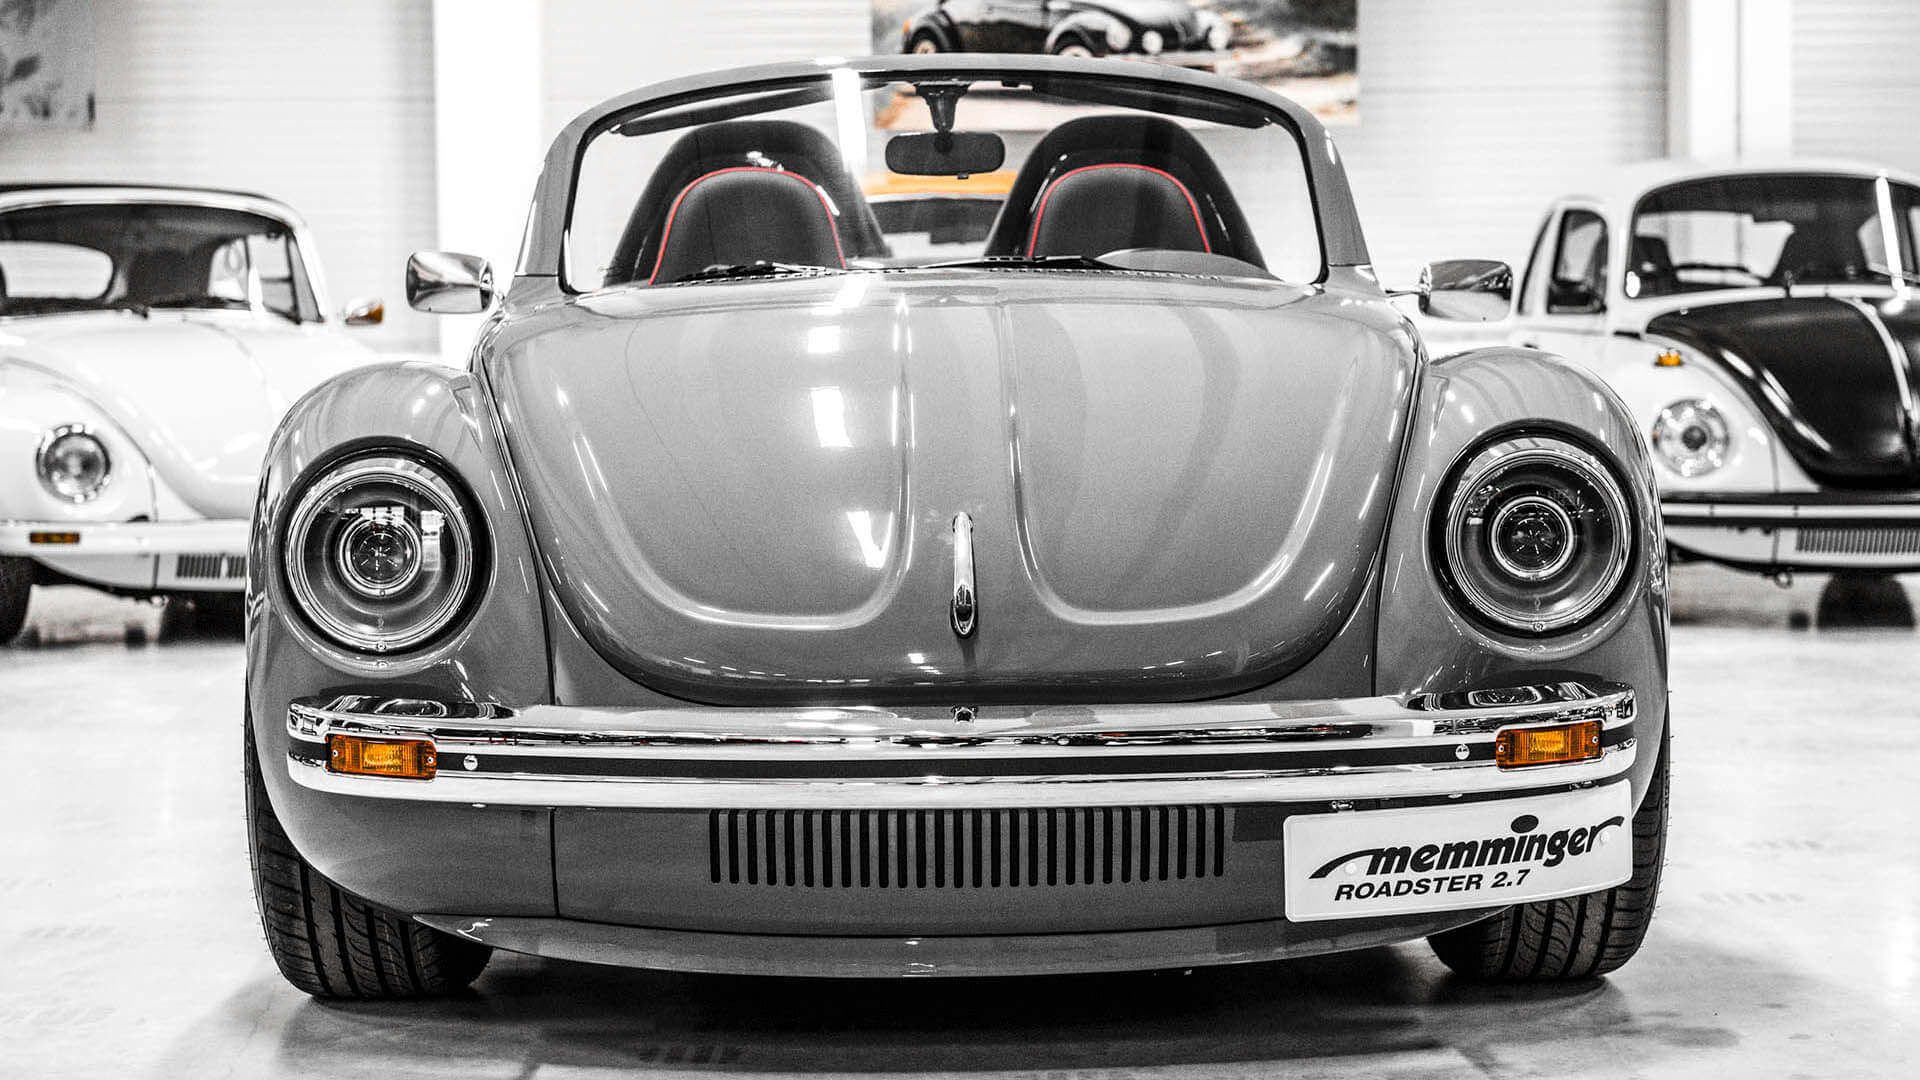 Memminger Roadster volkswagen beetle / رودستر ممینگر فولکس‌واگن بیتل